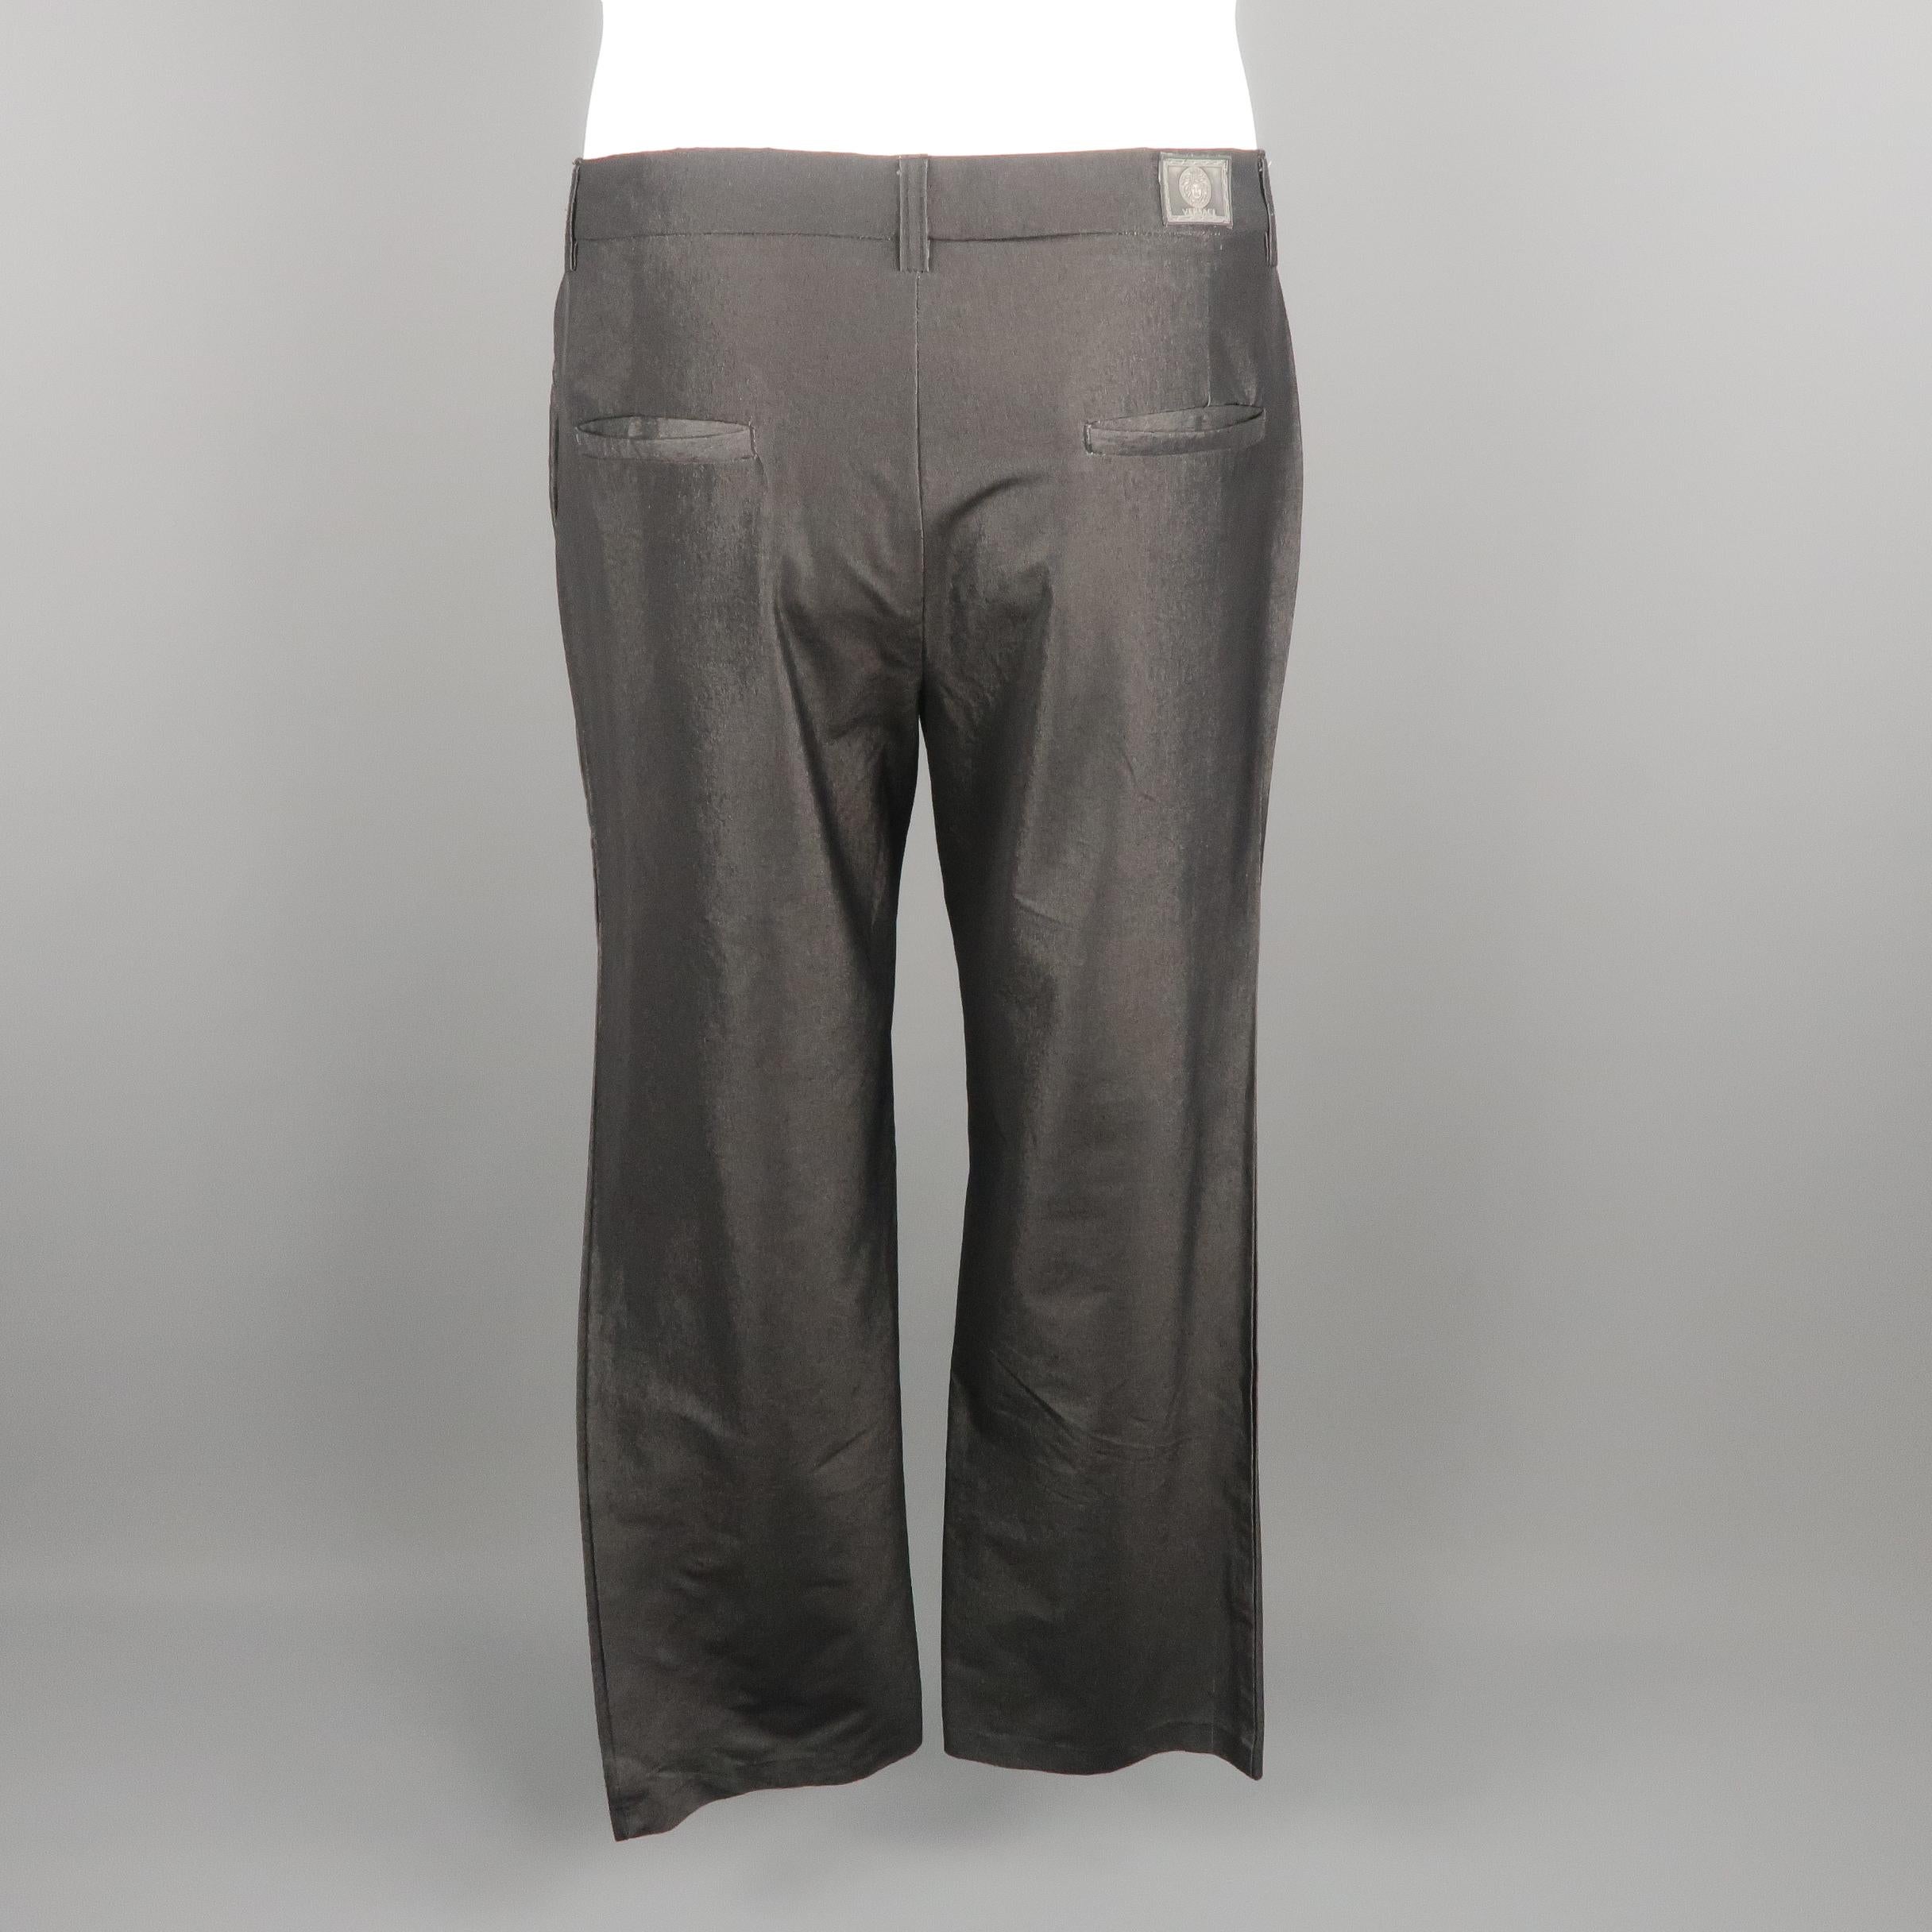 Black GIANNI VERSACE Size 32 Charcoal Metallic Cotton Blend Casual Pants